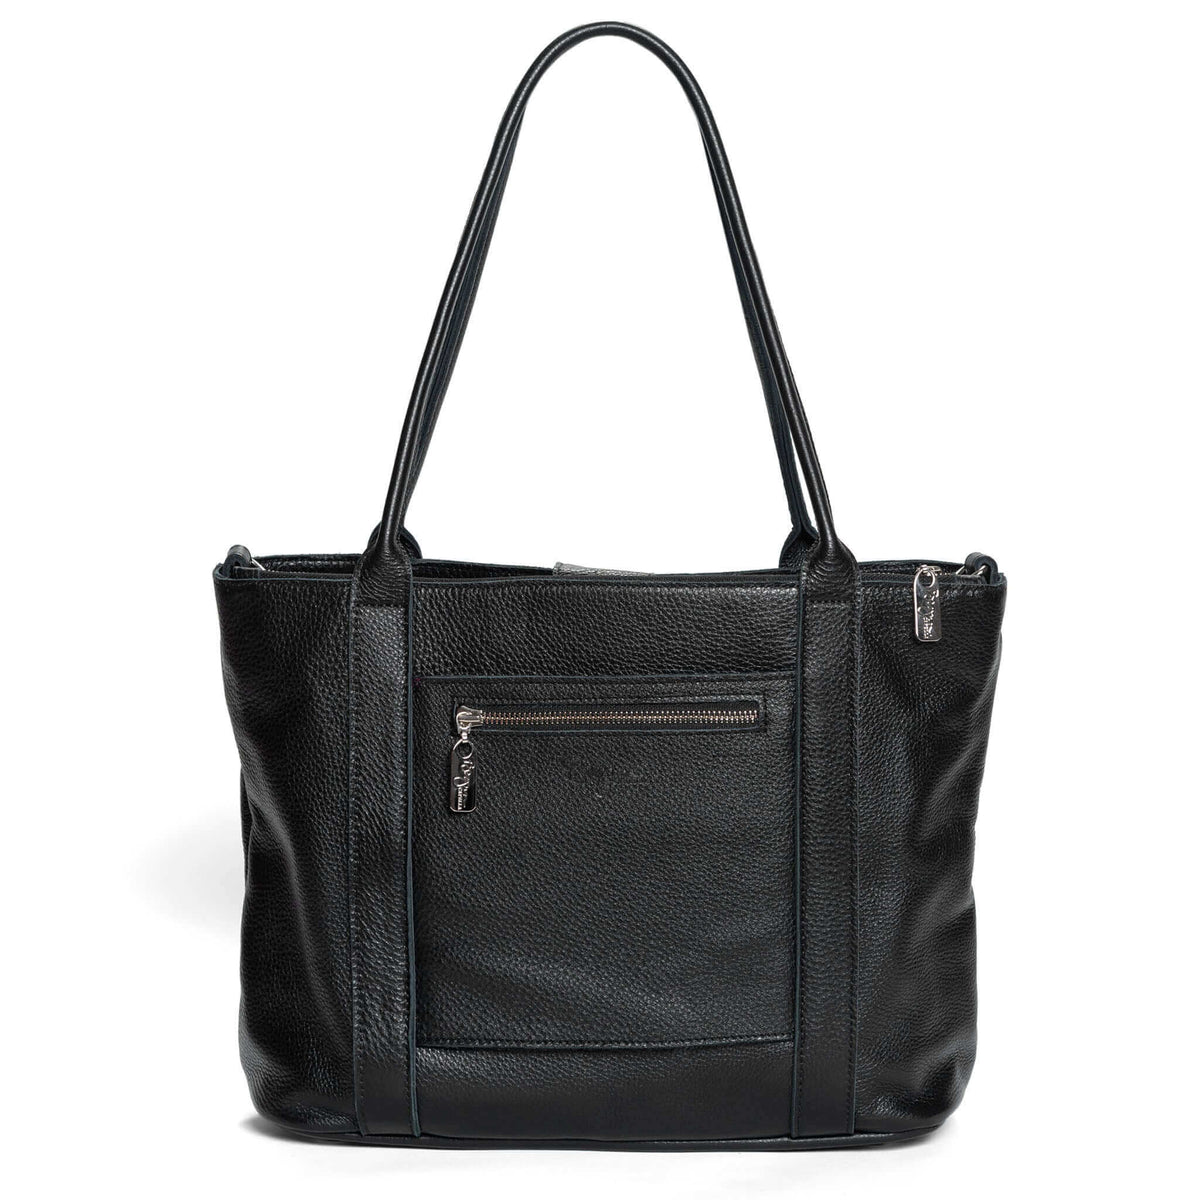 The perfect leather tote bag, black Noche, Brynn Capella, made in the usa